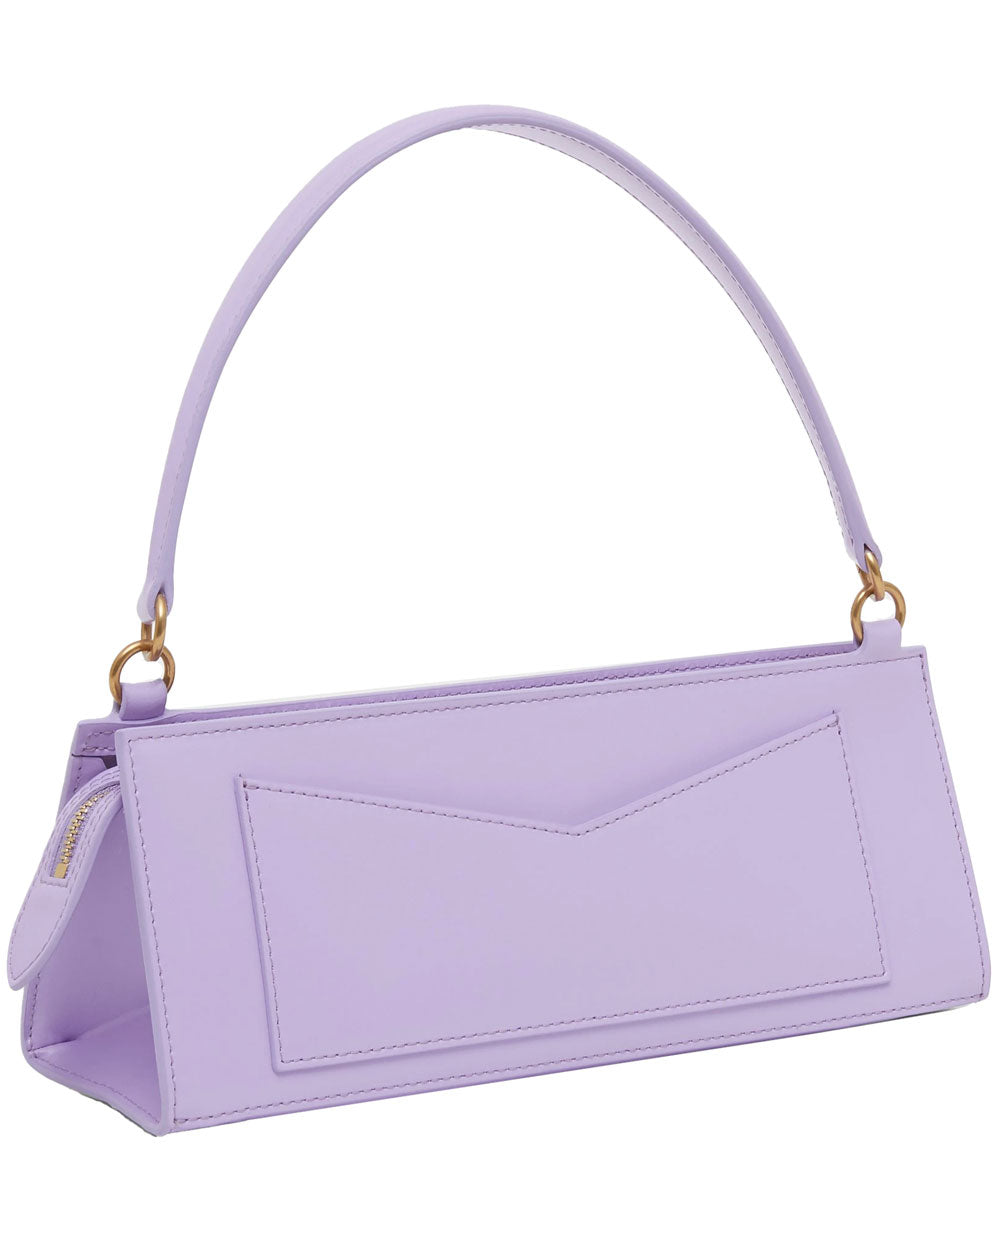 Pencil Bag in Lavender